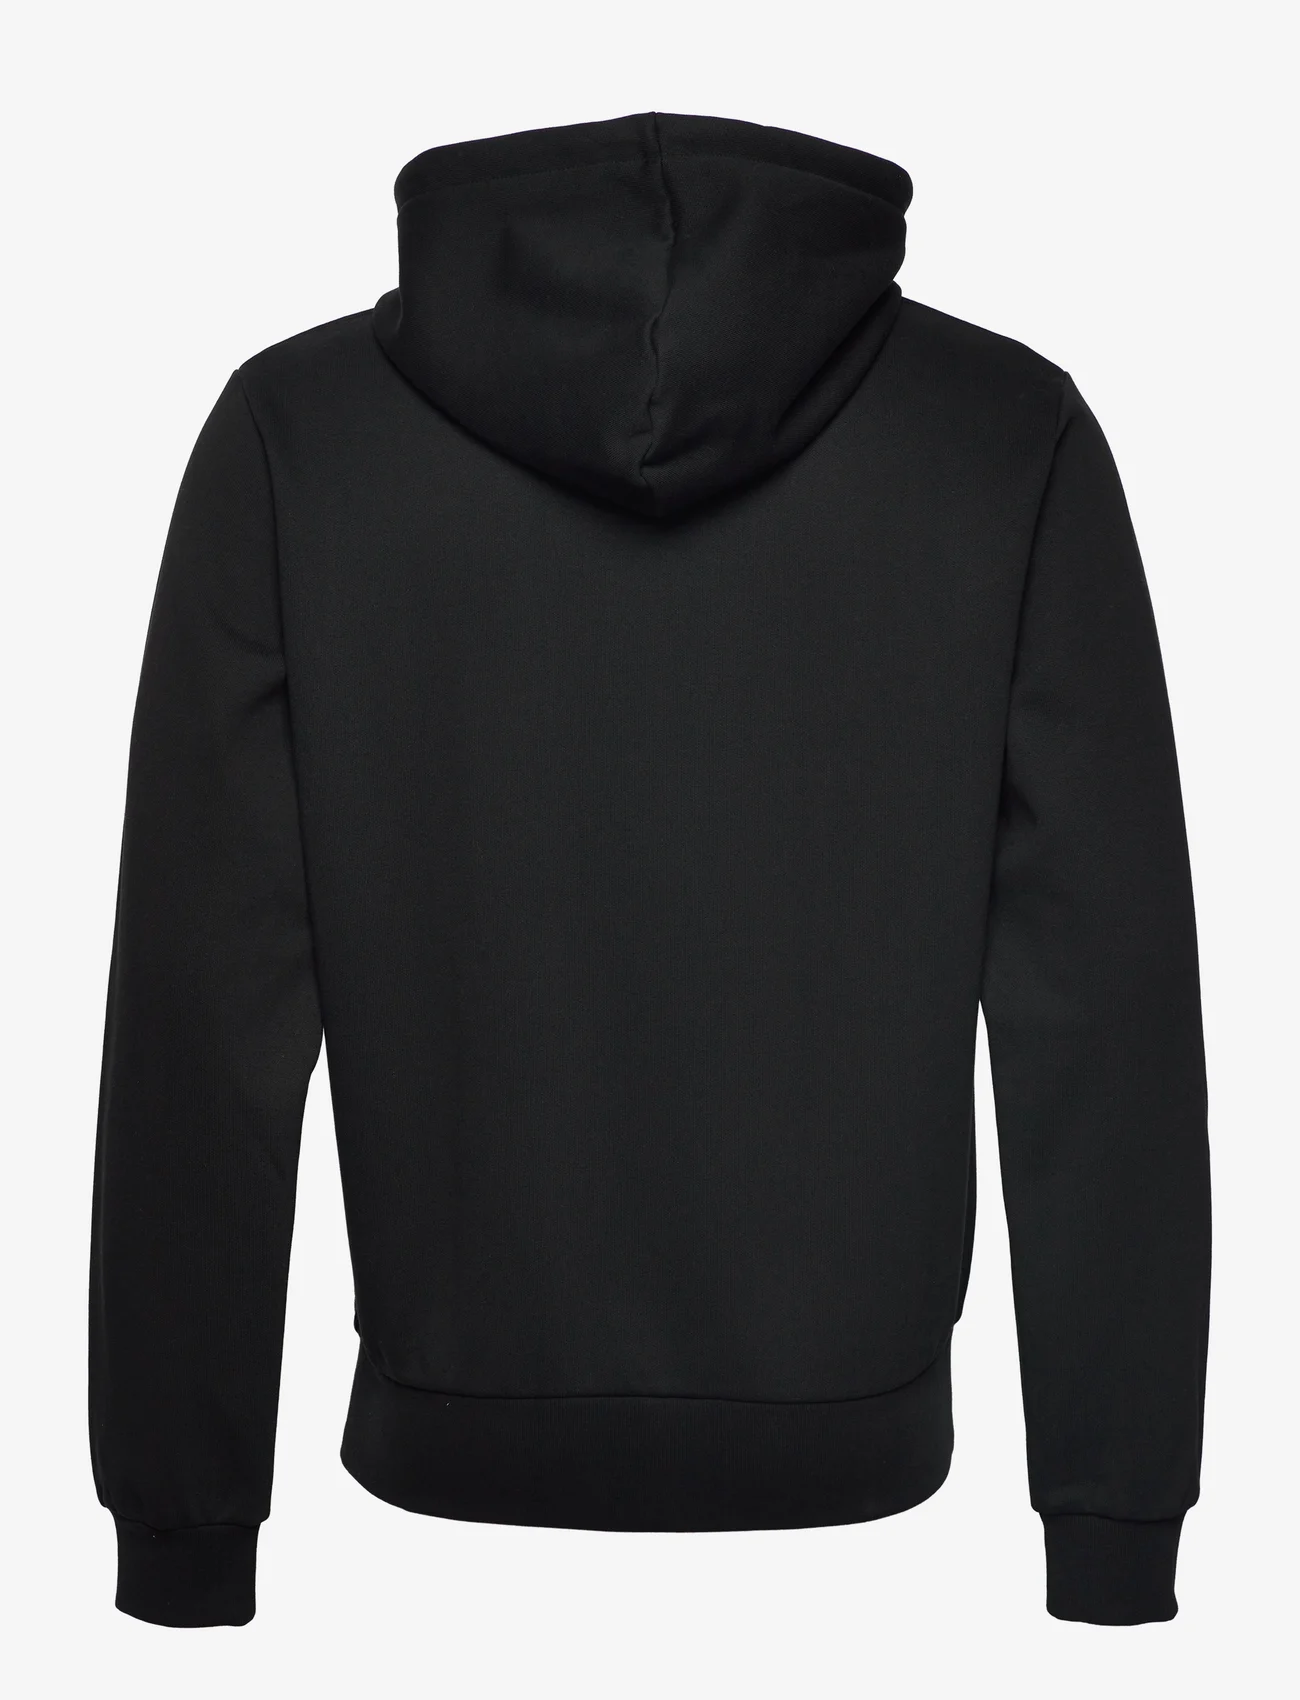 Lacoste - SWEATSHIRTS - hoodies - black - 1